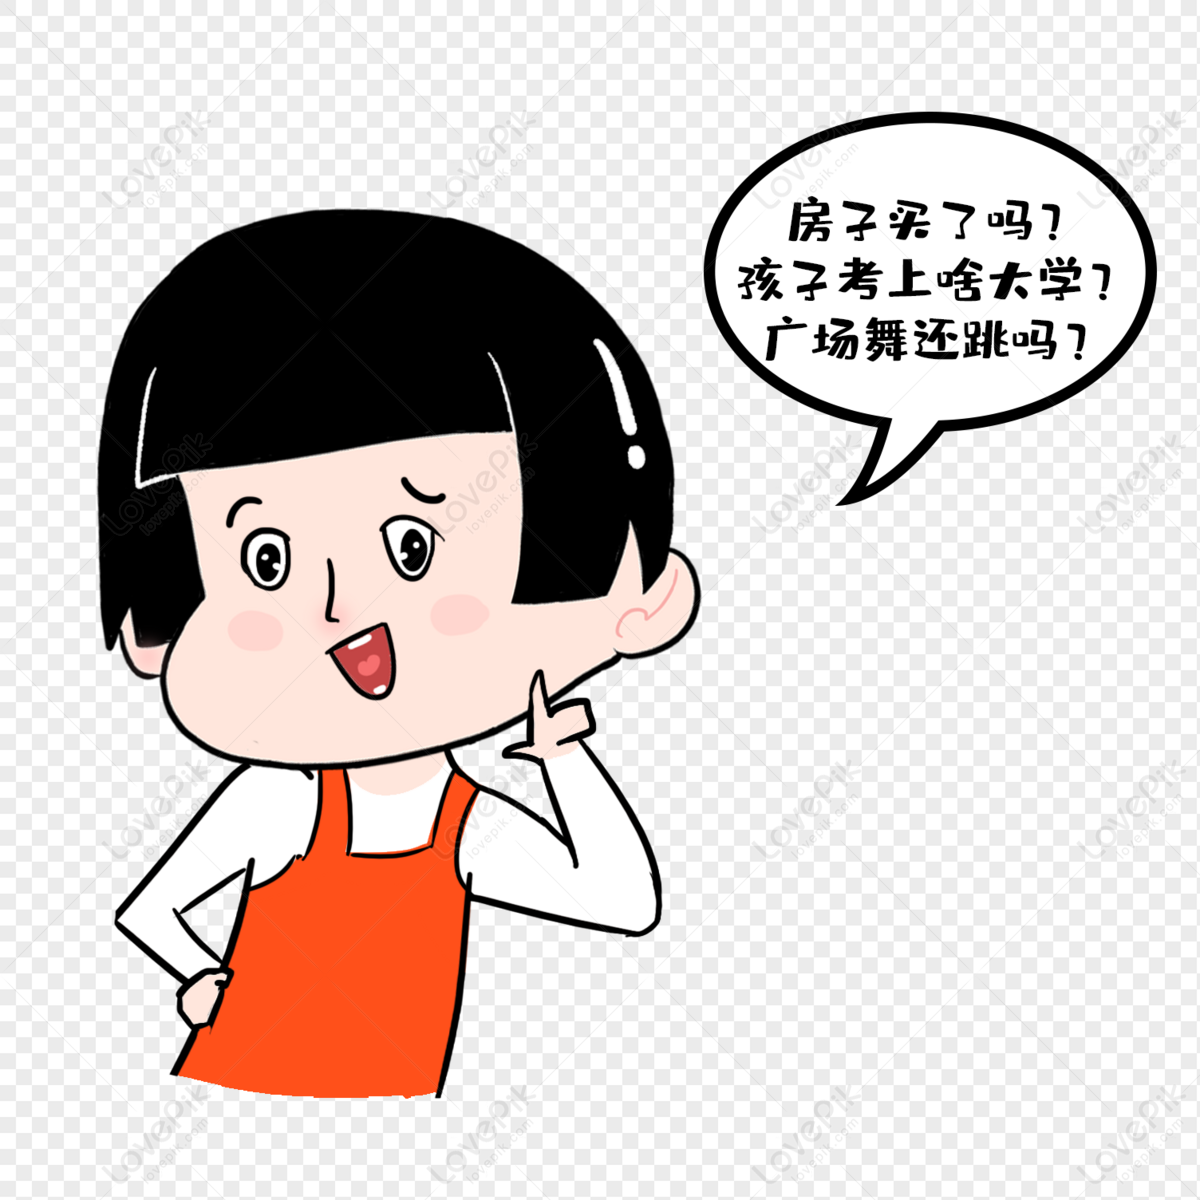 2+ Thousand Chinese New Year Emoji Royalty-Free Images, Stock